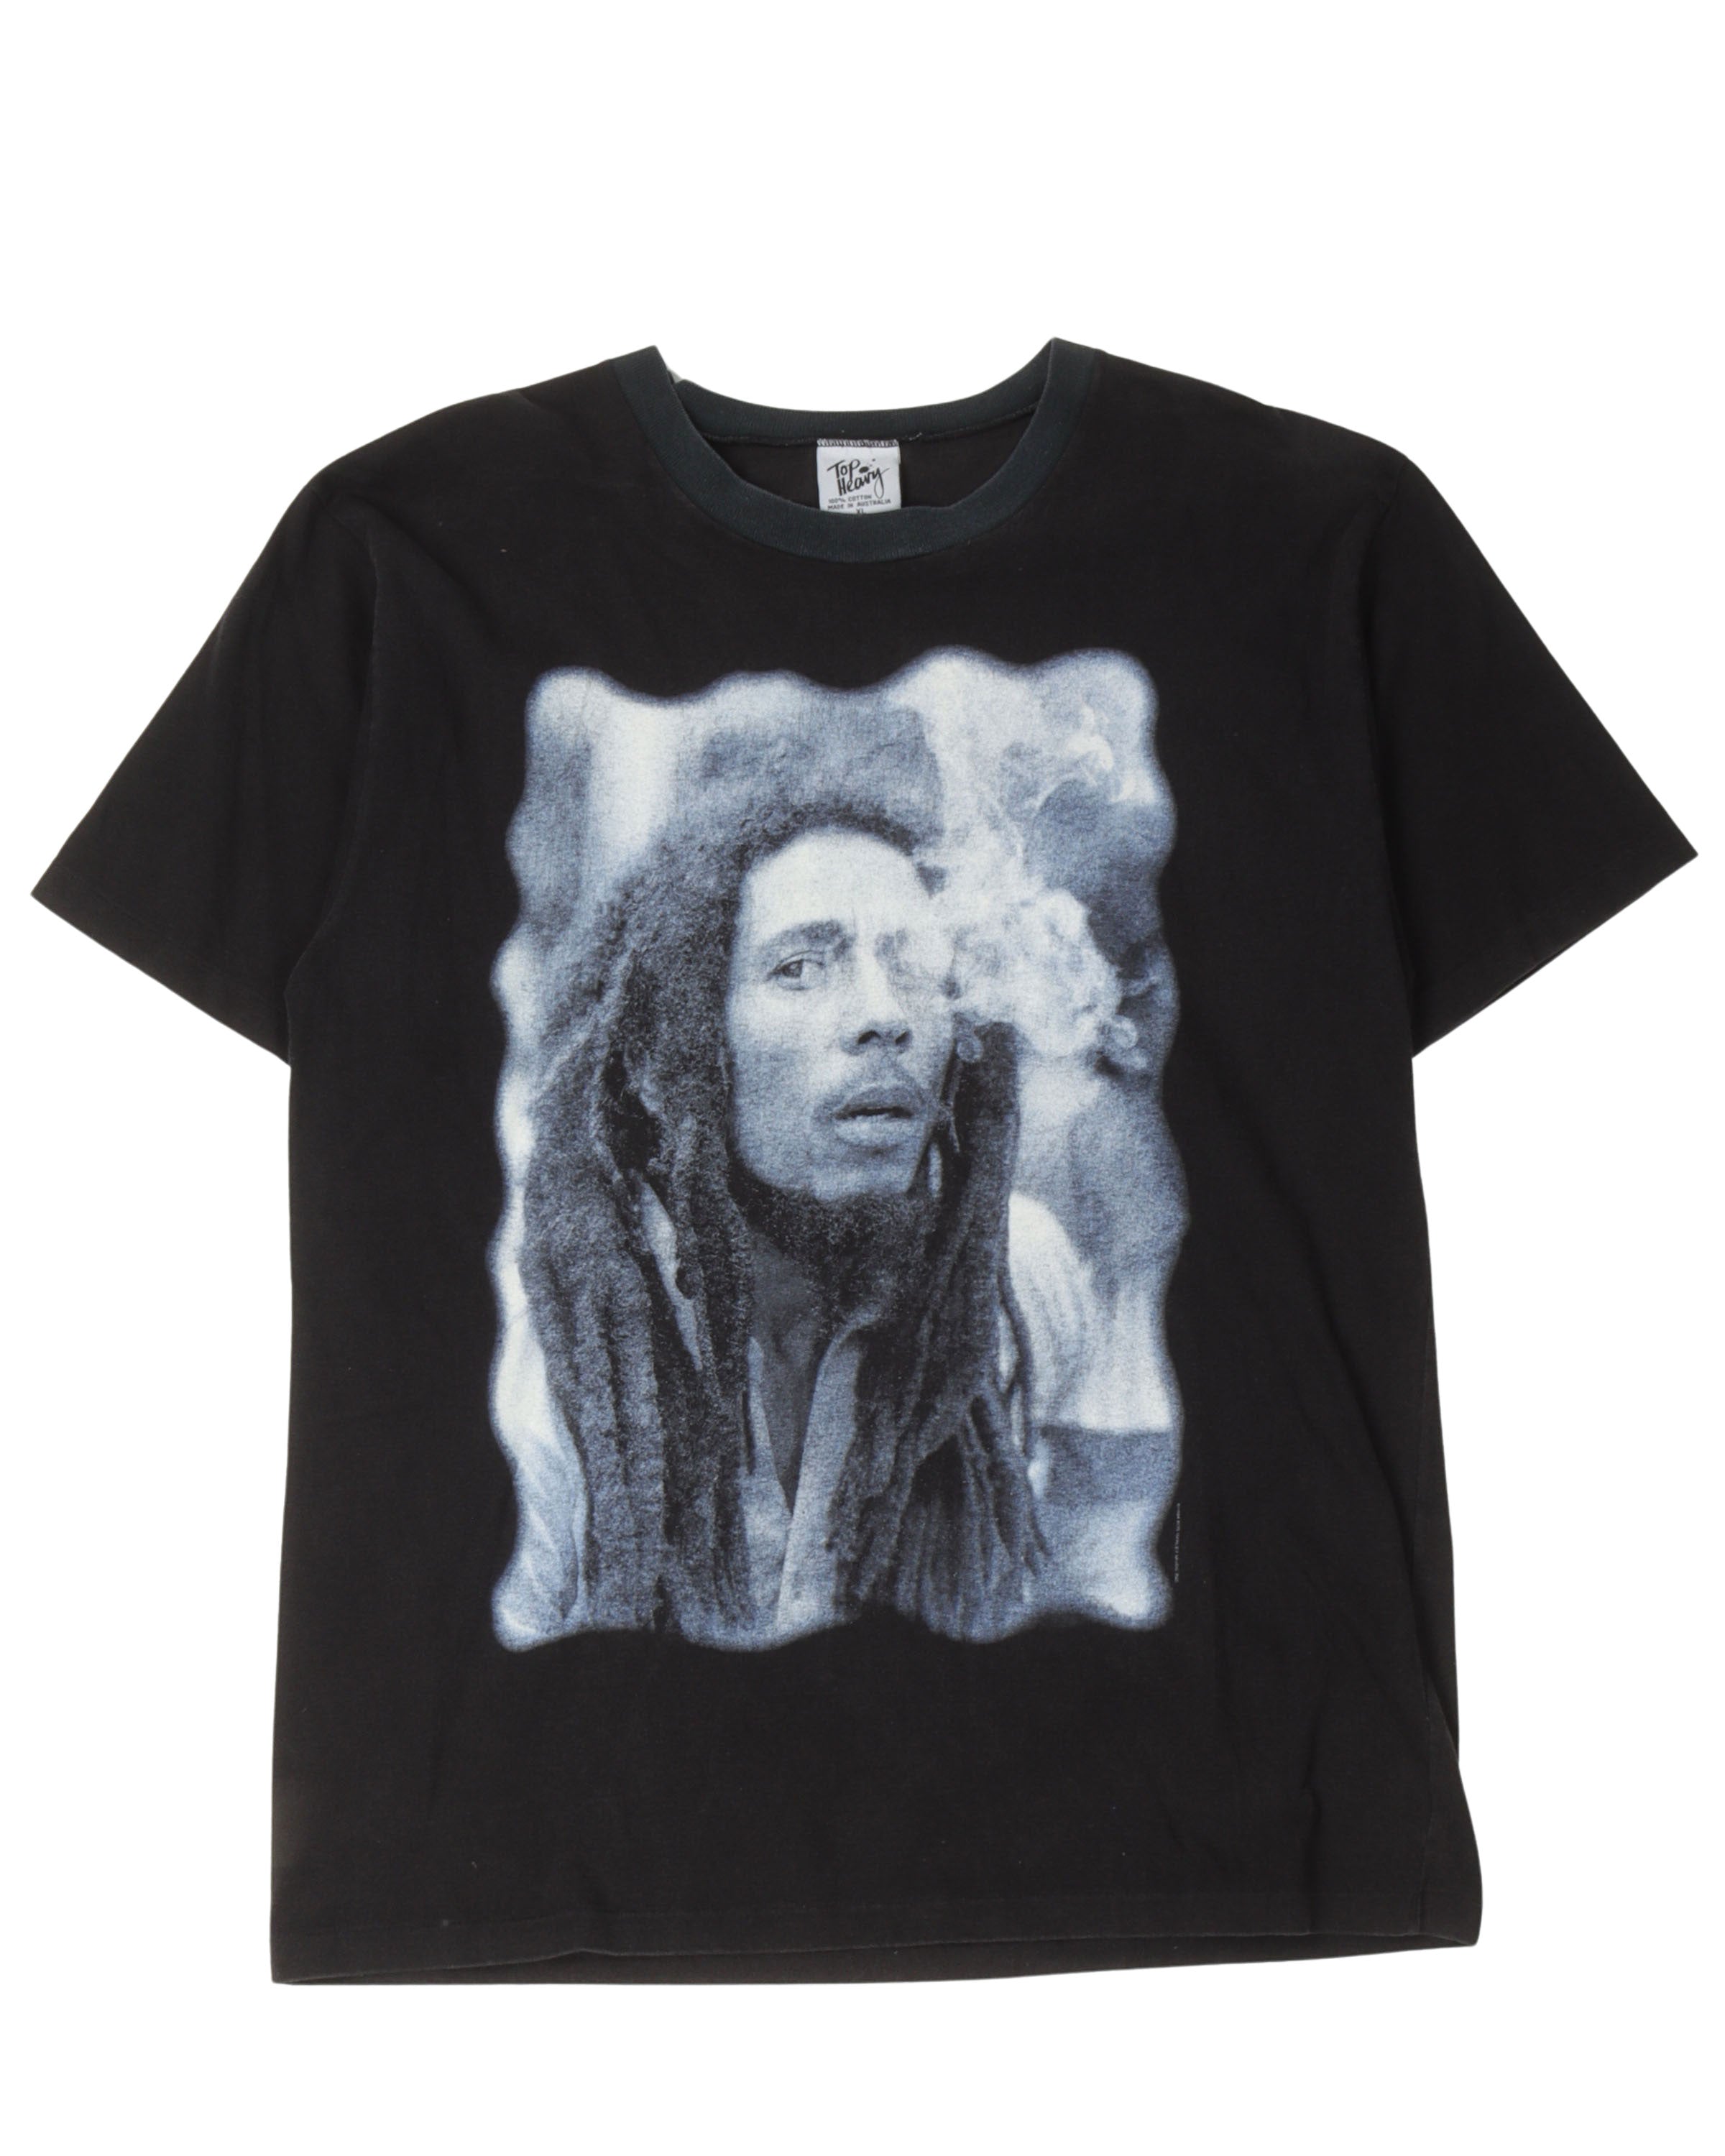 Bob Marley Smoke T-Shirt